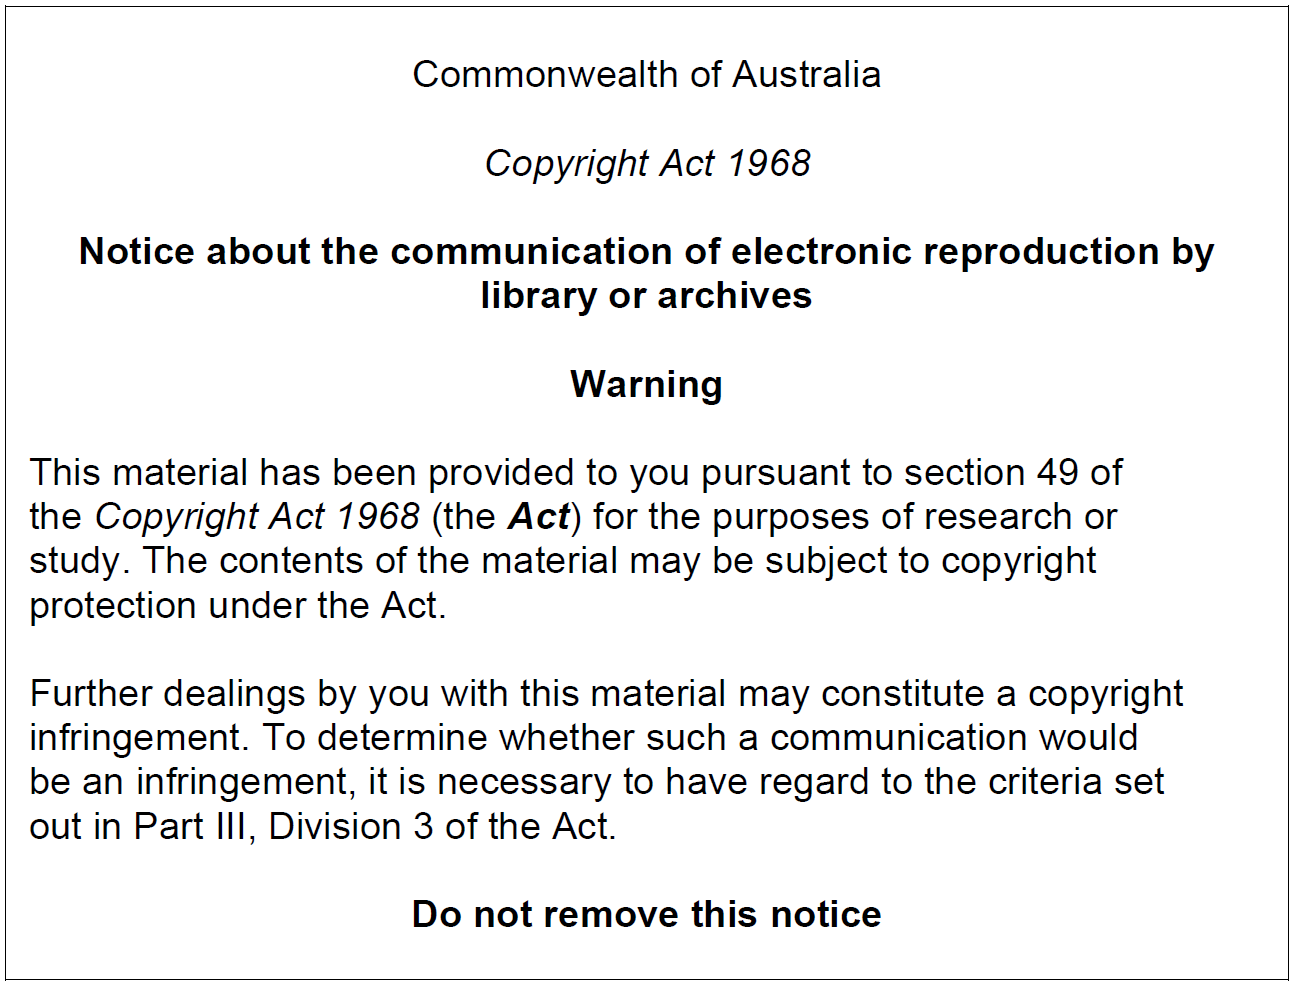 Copyright warning notice - s49